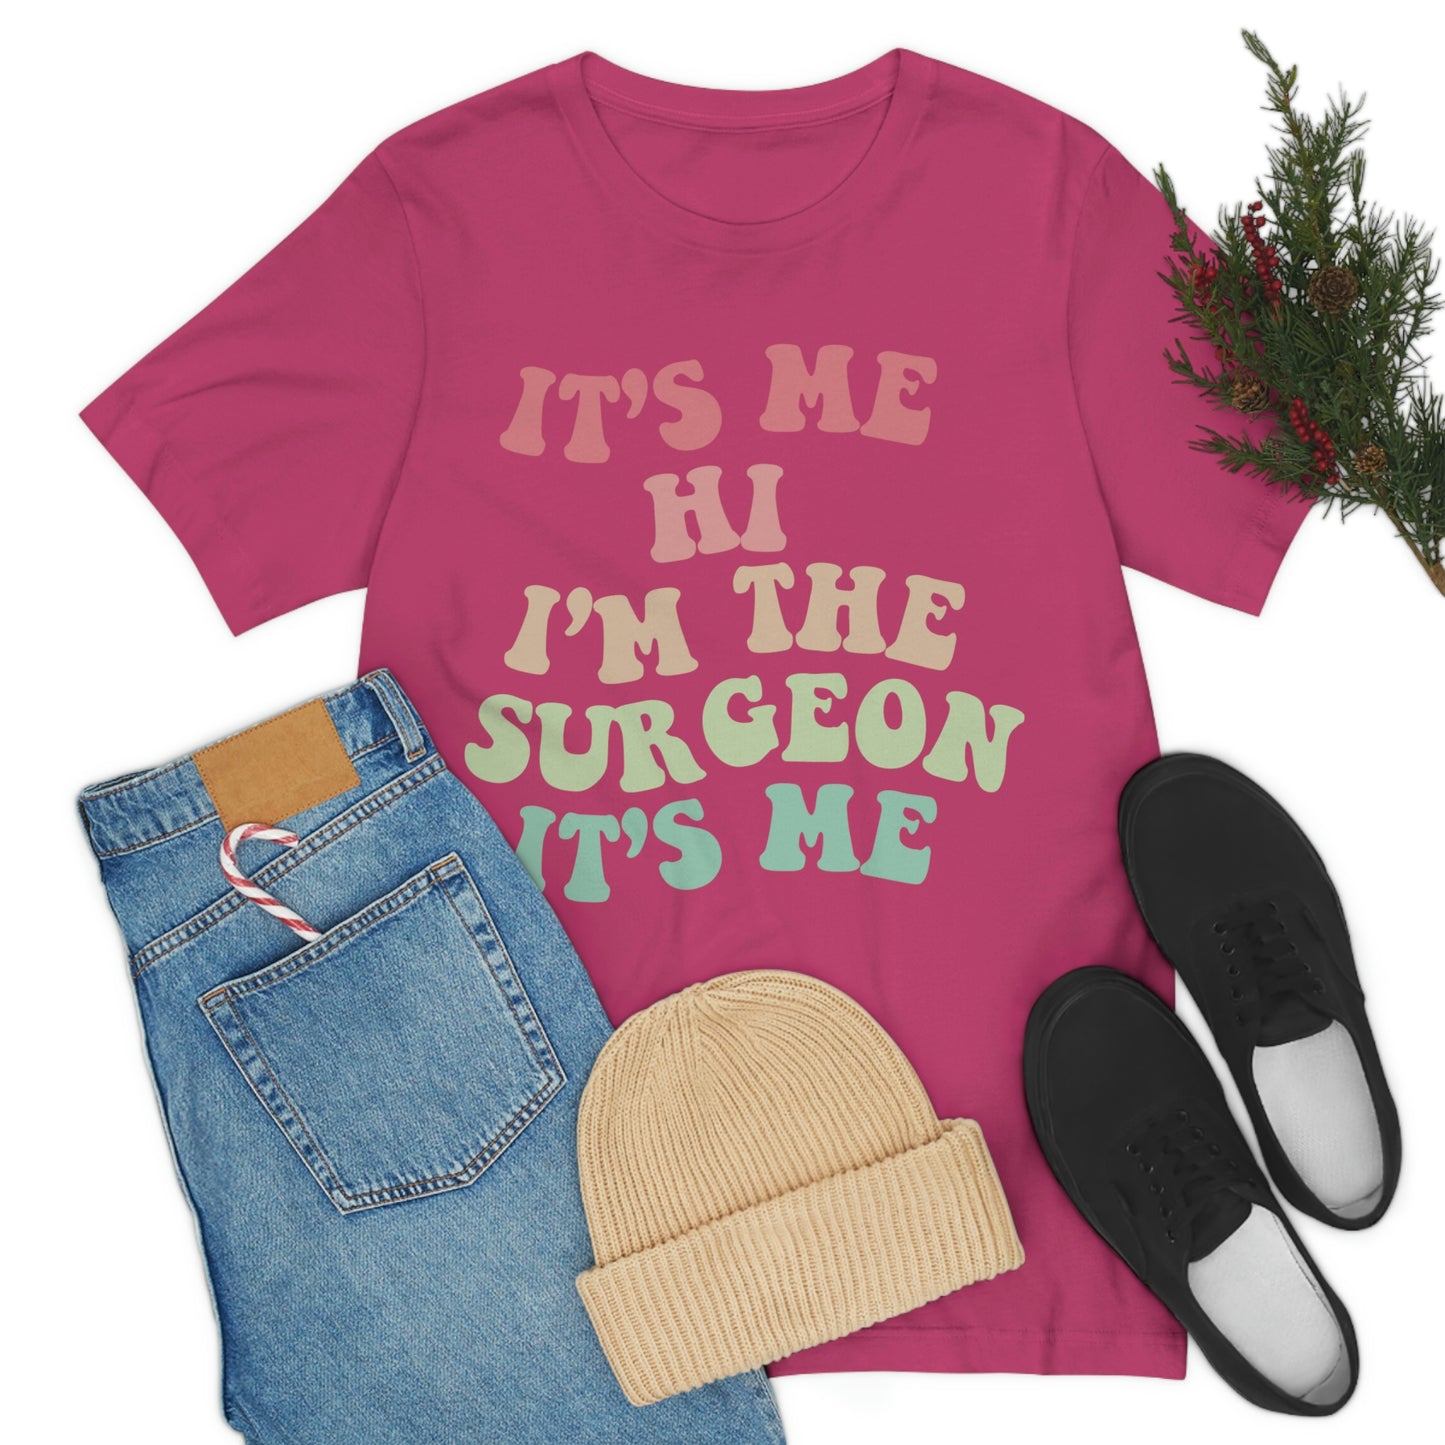 Funny Trending Shirt, Its Me Hi Im the Surgeon Its Me Tshirt, Taylor Swiftie, Surgeon, Funny Sayings Shirt, Doctor, Health,